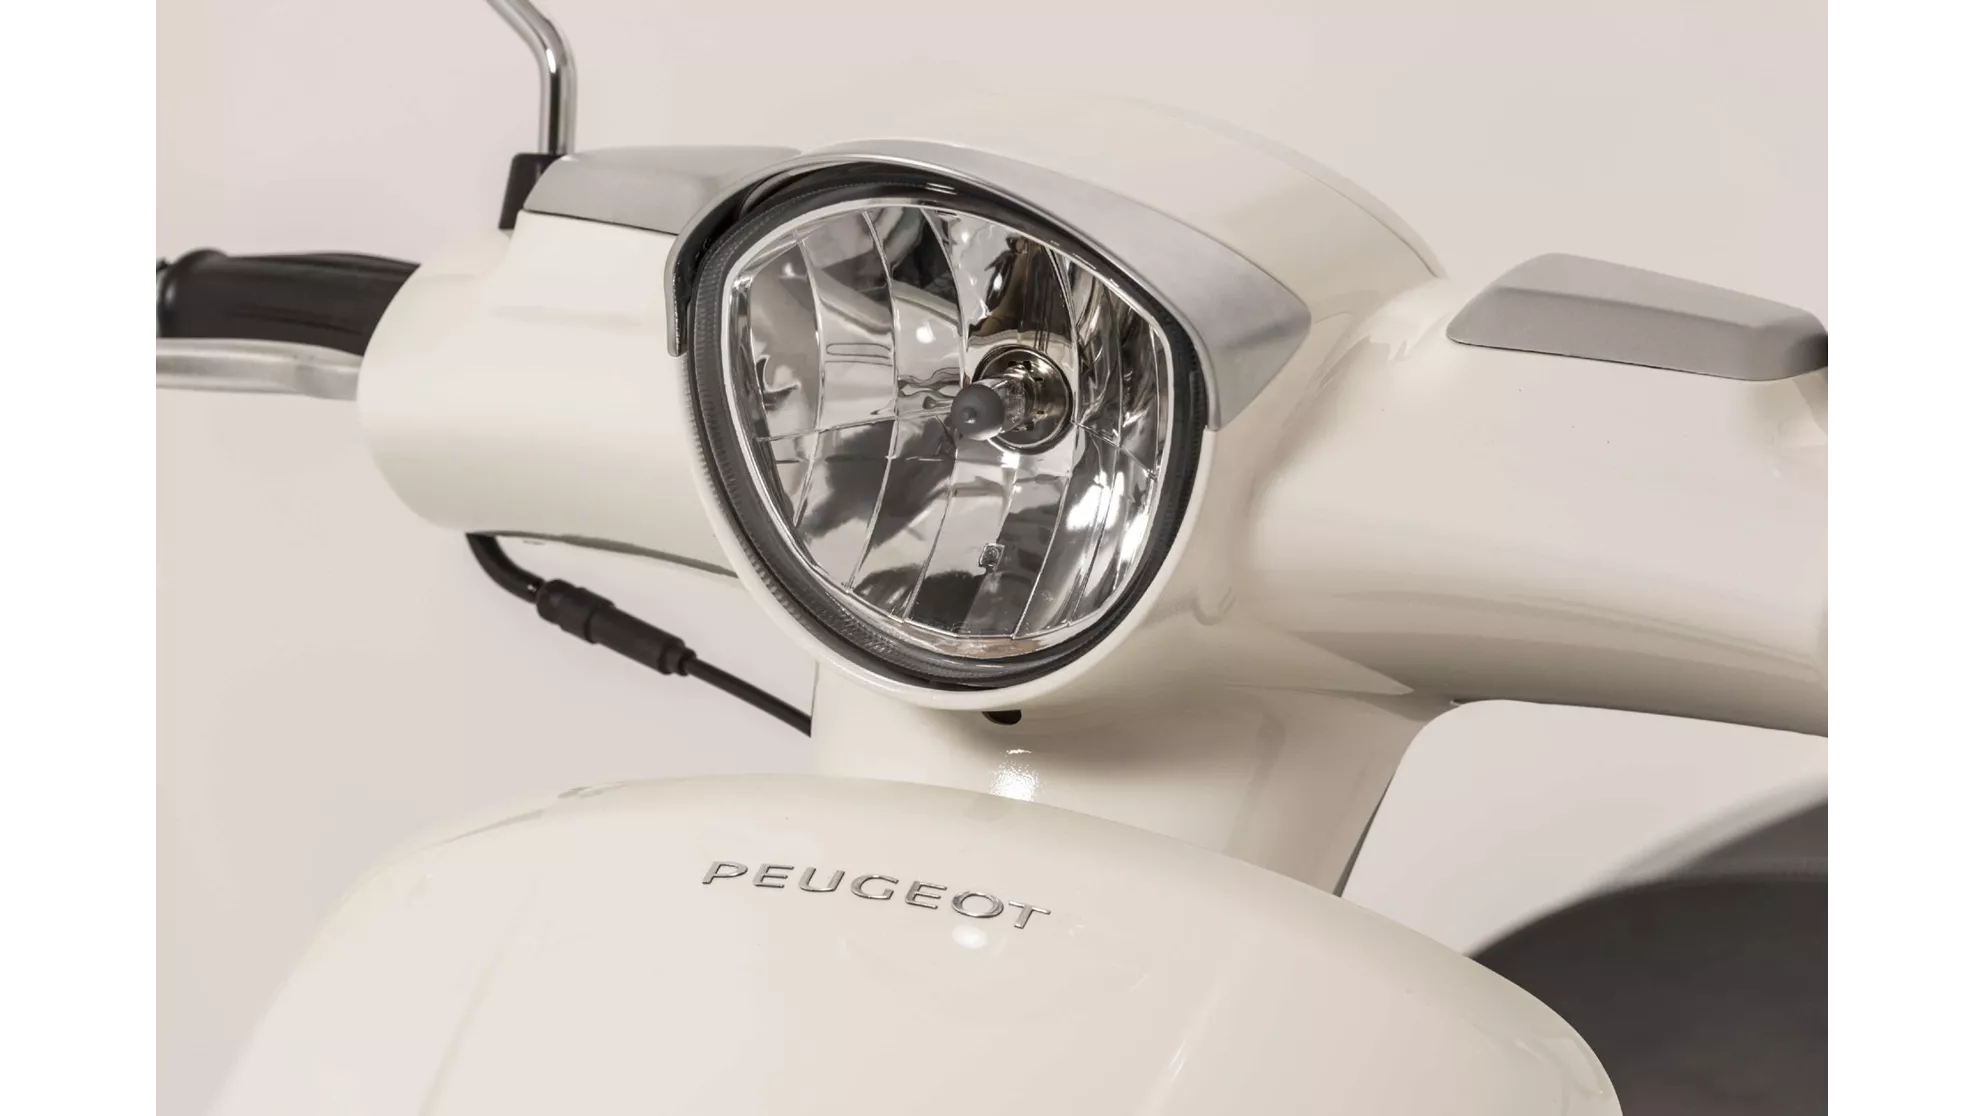 Peugeot Django 125 Heritage - Image 9